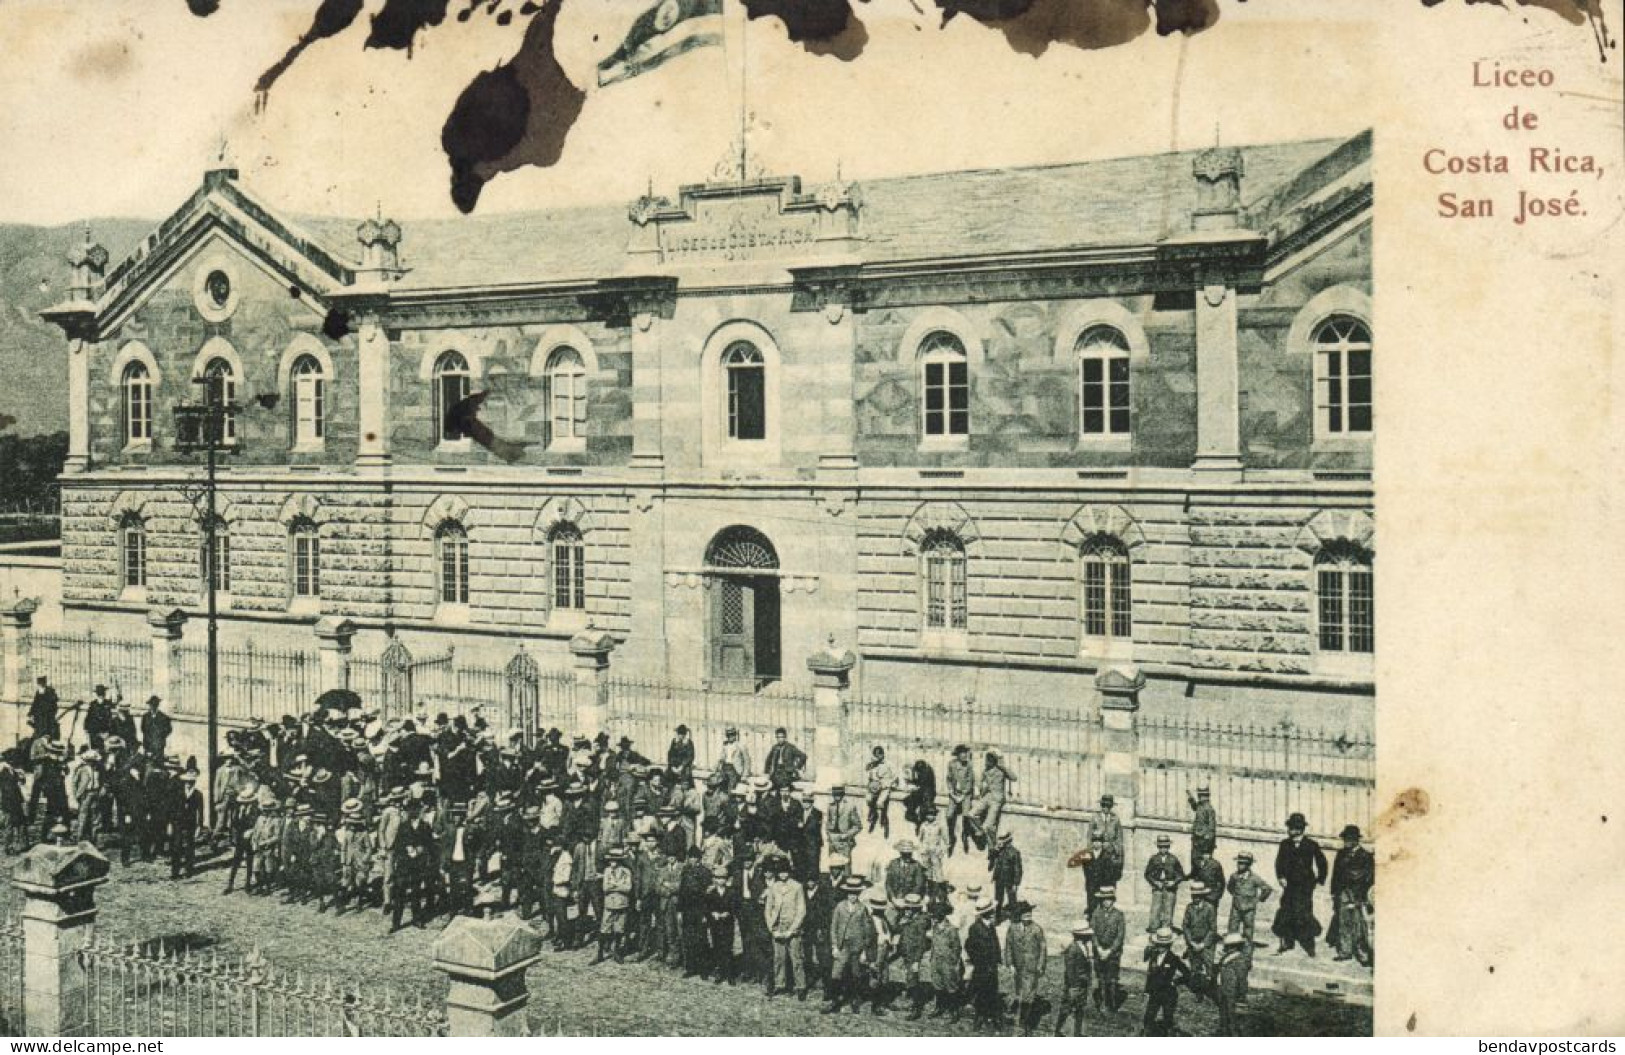 Costa Rica, C.A., SAN JOSÉ, Liceo With Students (1900s) Postcard - Costa Rica